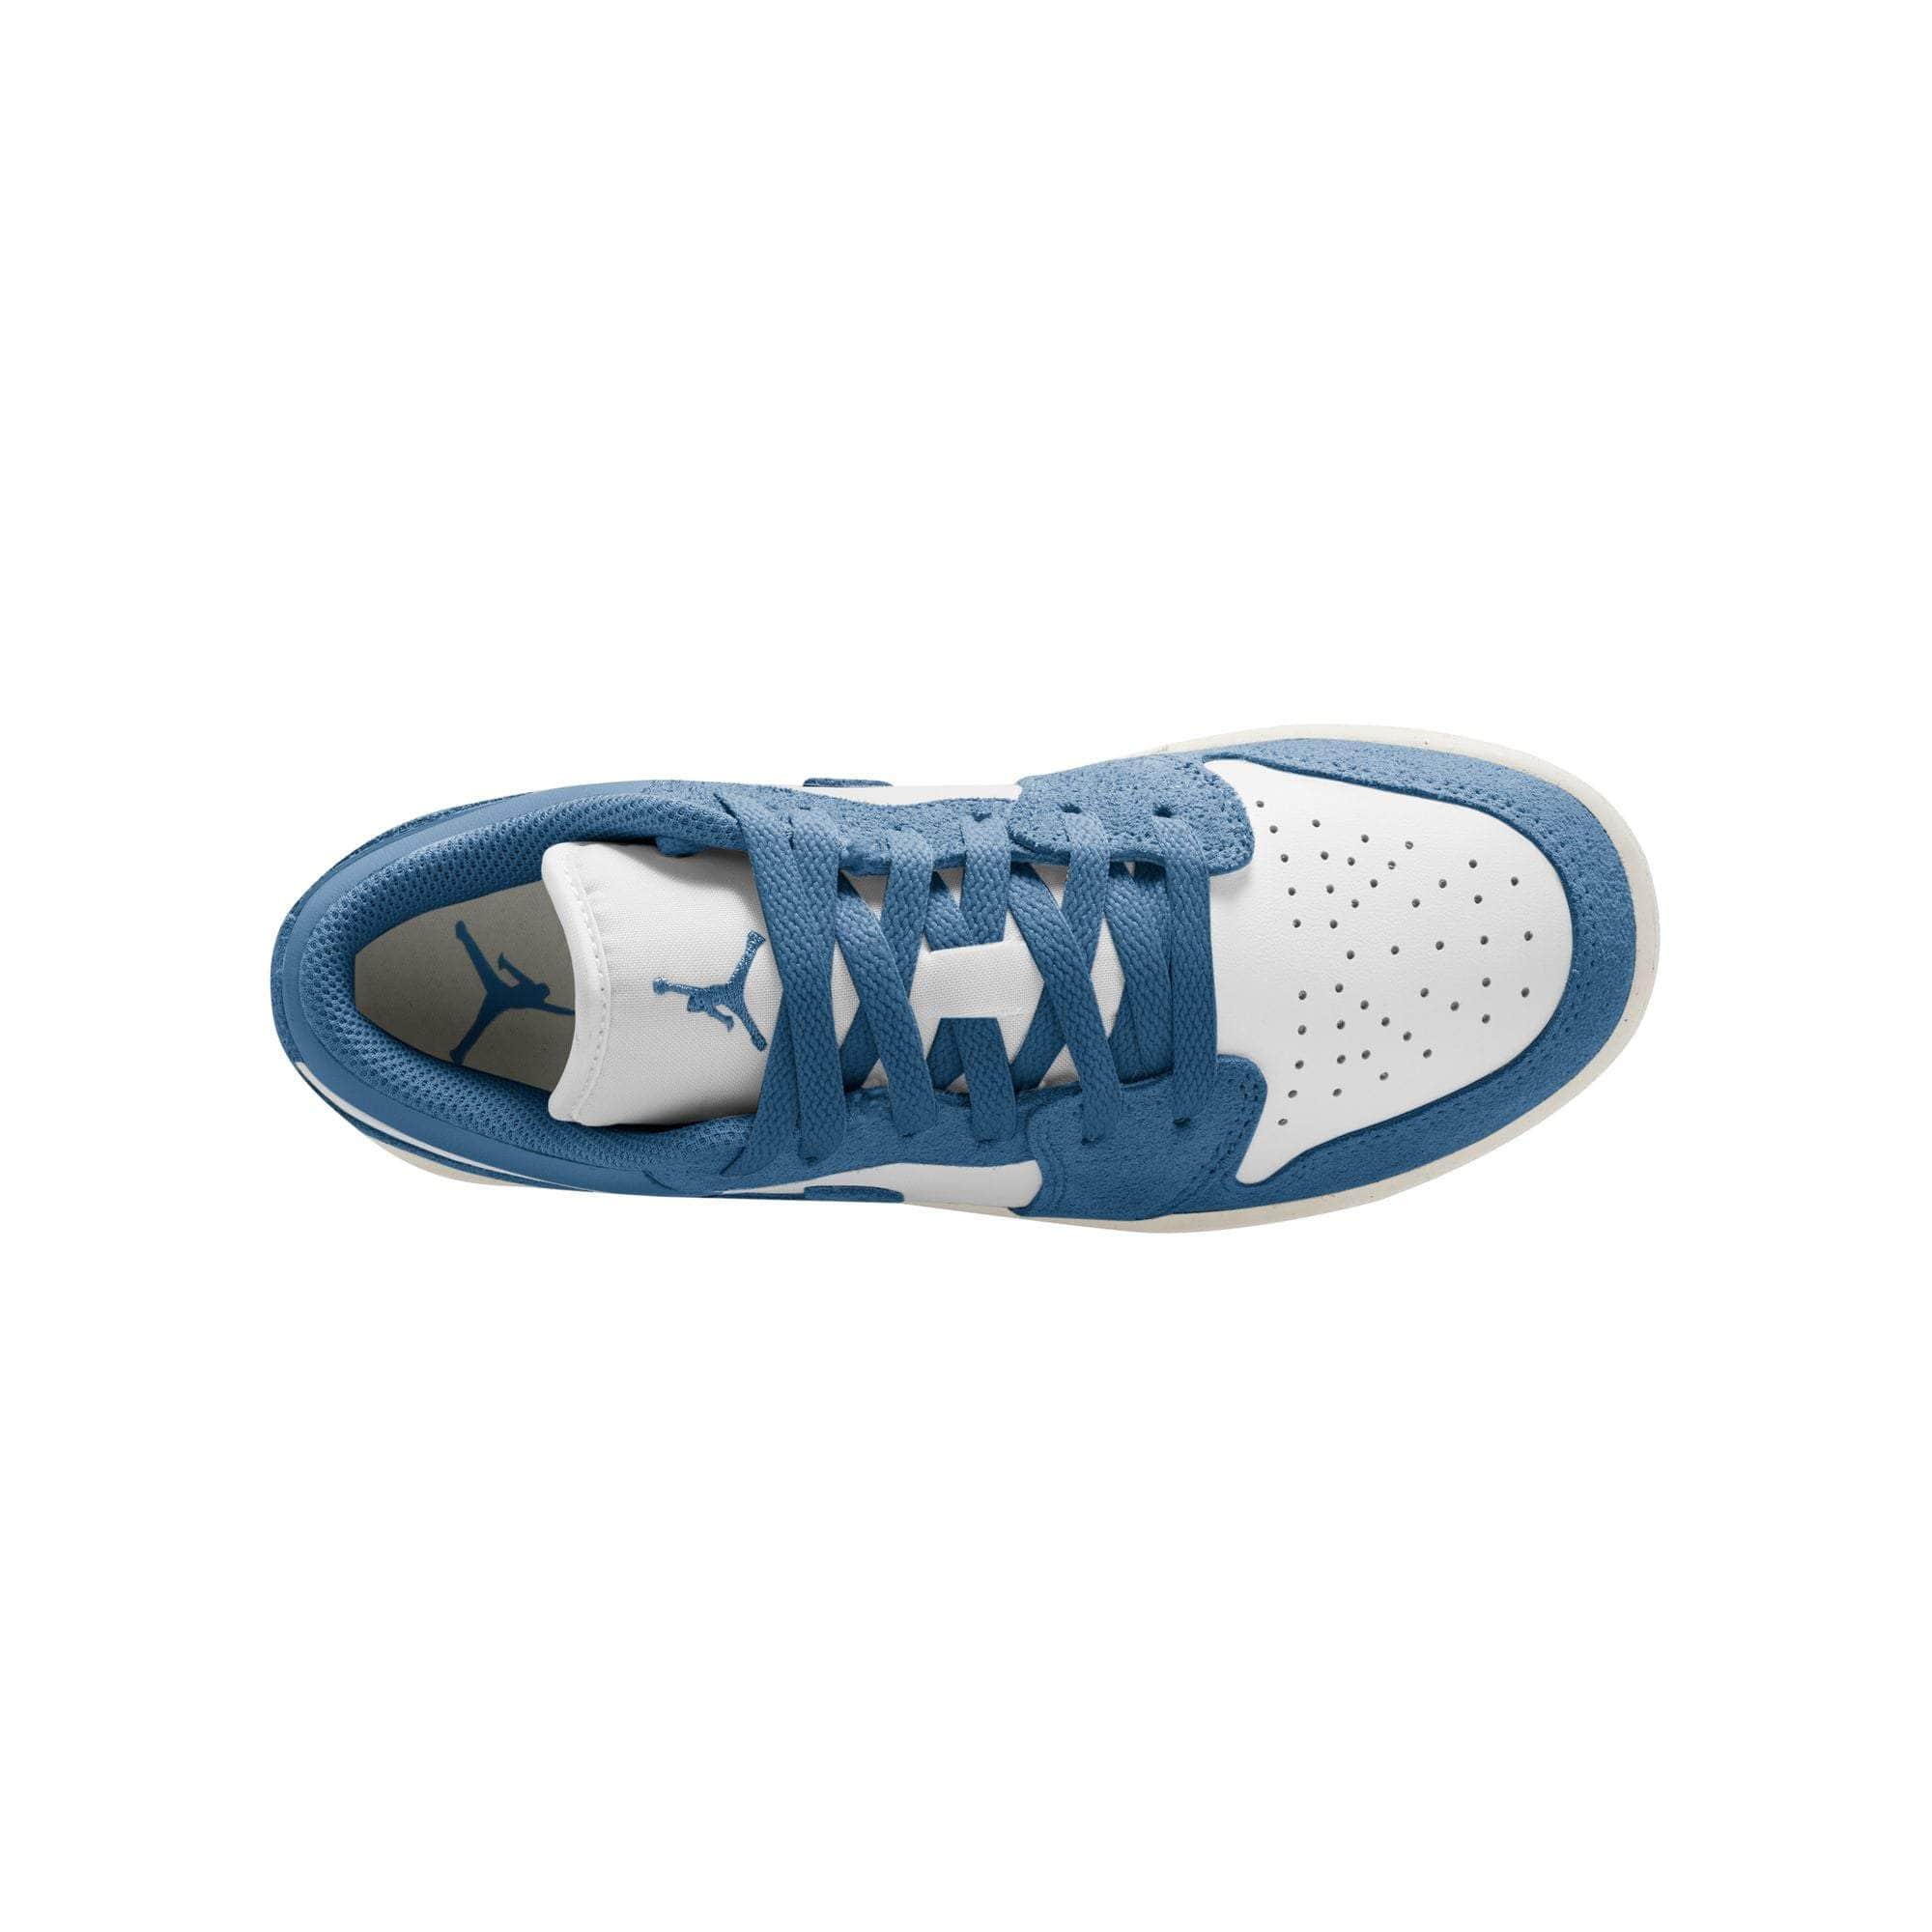 Air Jordan Footwear Air Jordan 1 Low "Industrial Blue" - Boy's GS